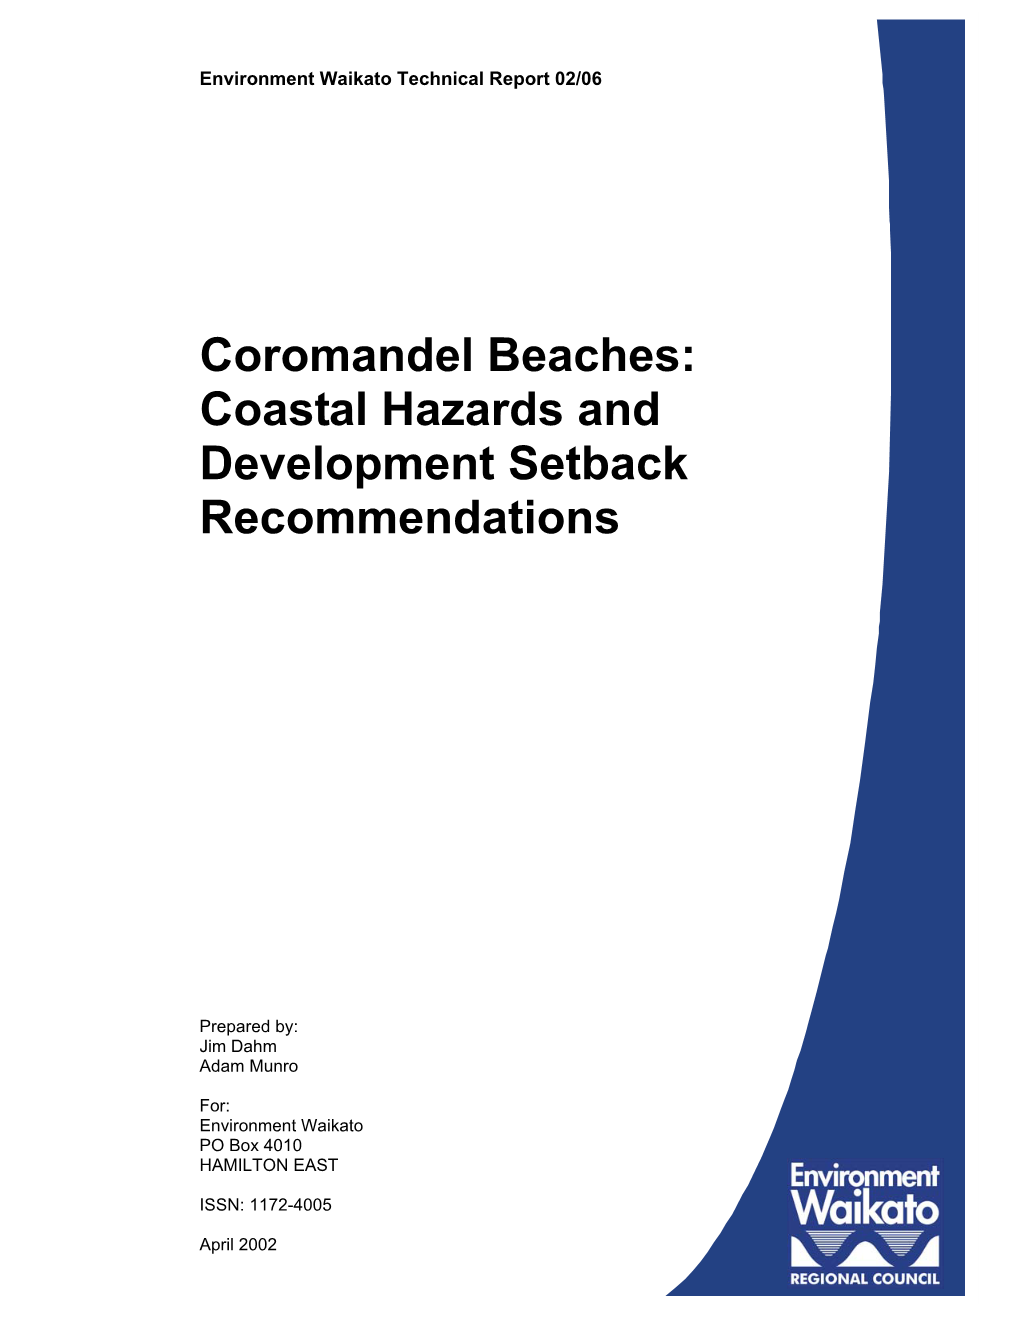 Coromandel Beaches: Coastal Hazards and Development Setback Recommendations